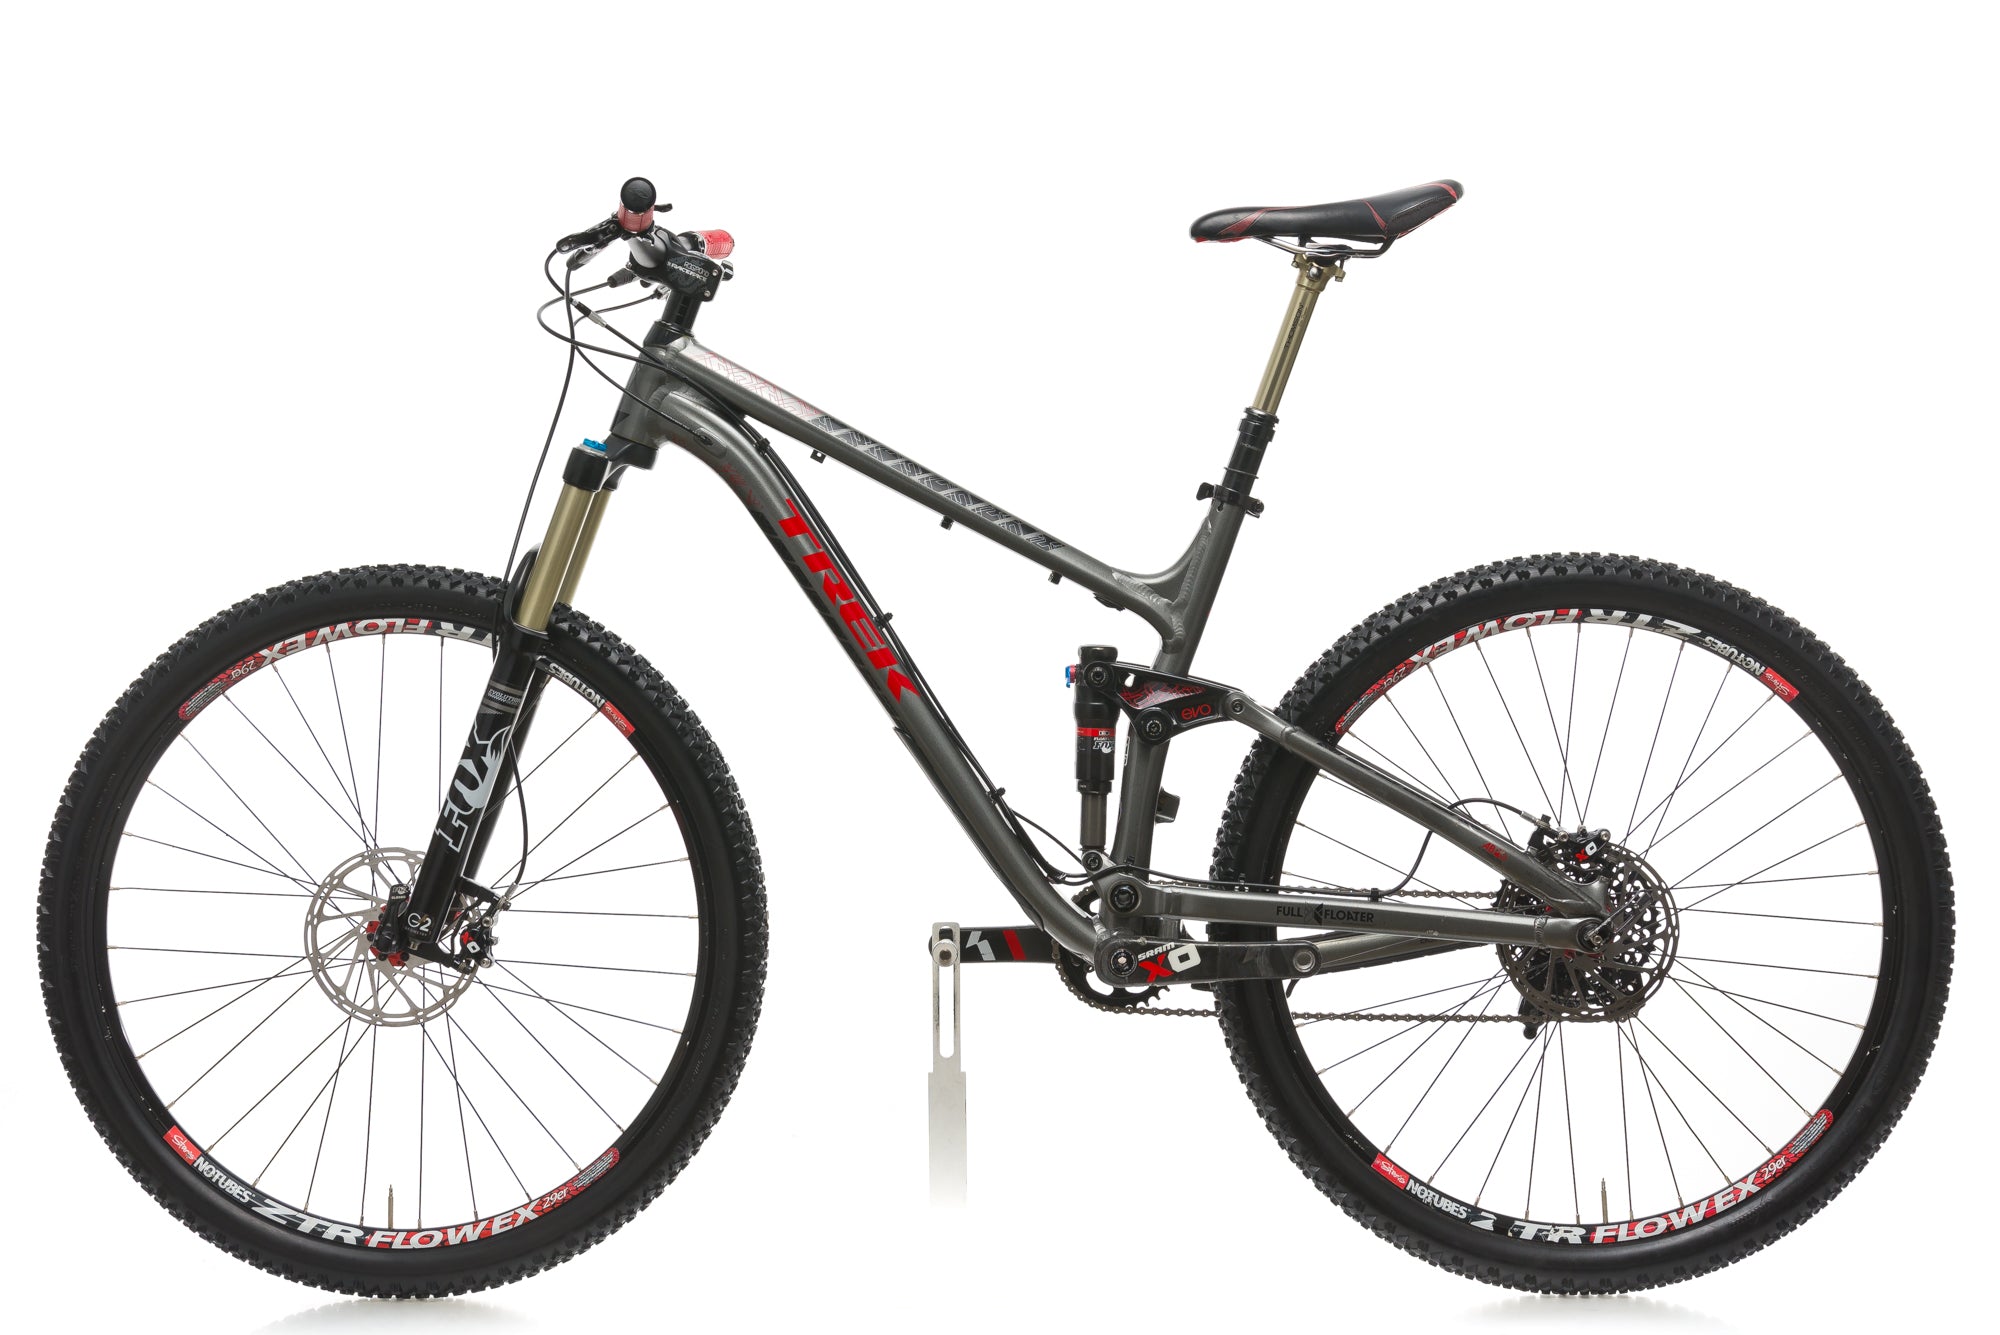 Trek Fuel EX 8 19.5in Bike - 2014 non-drive side